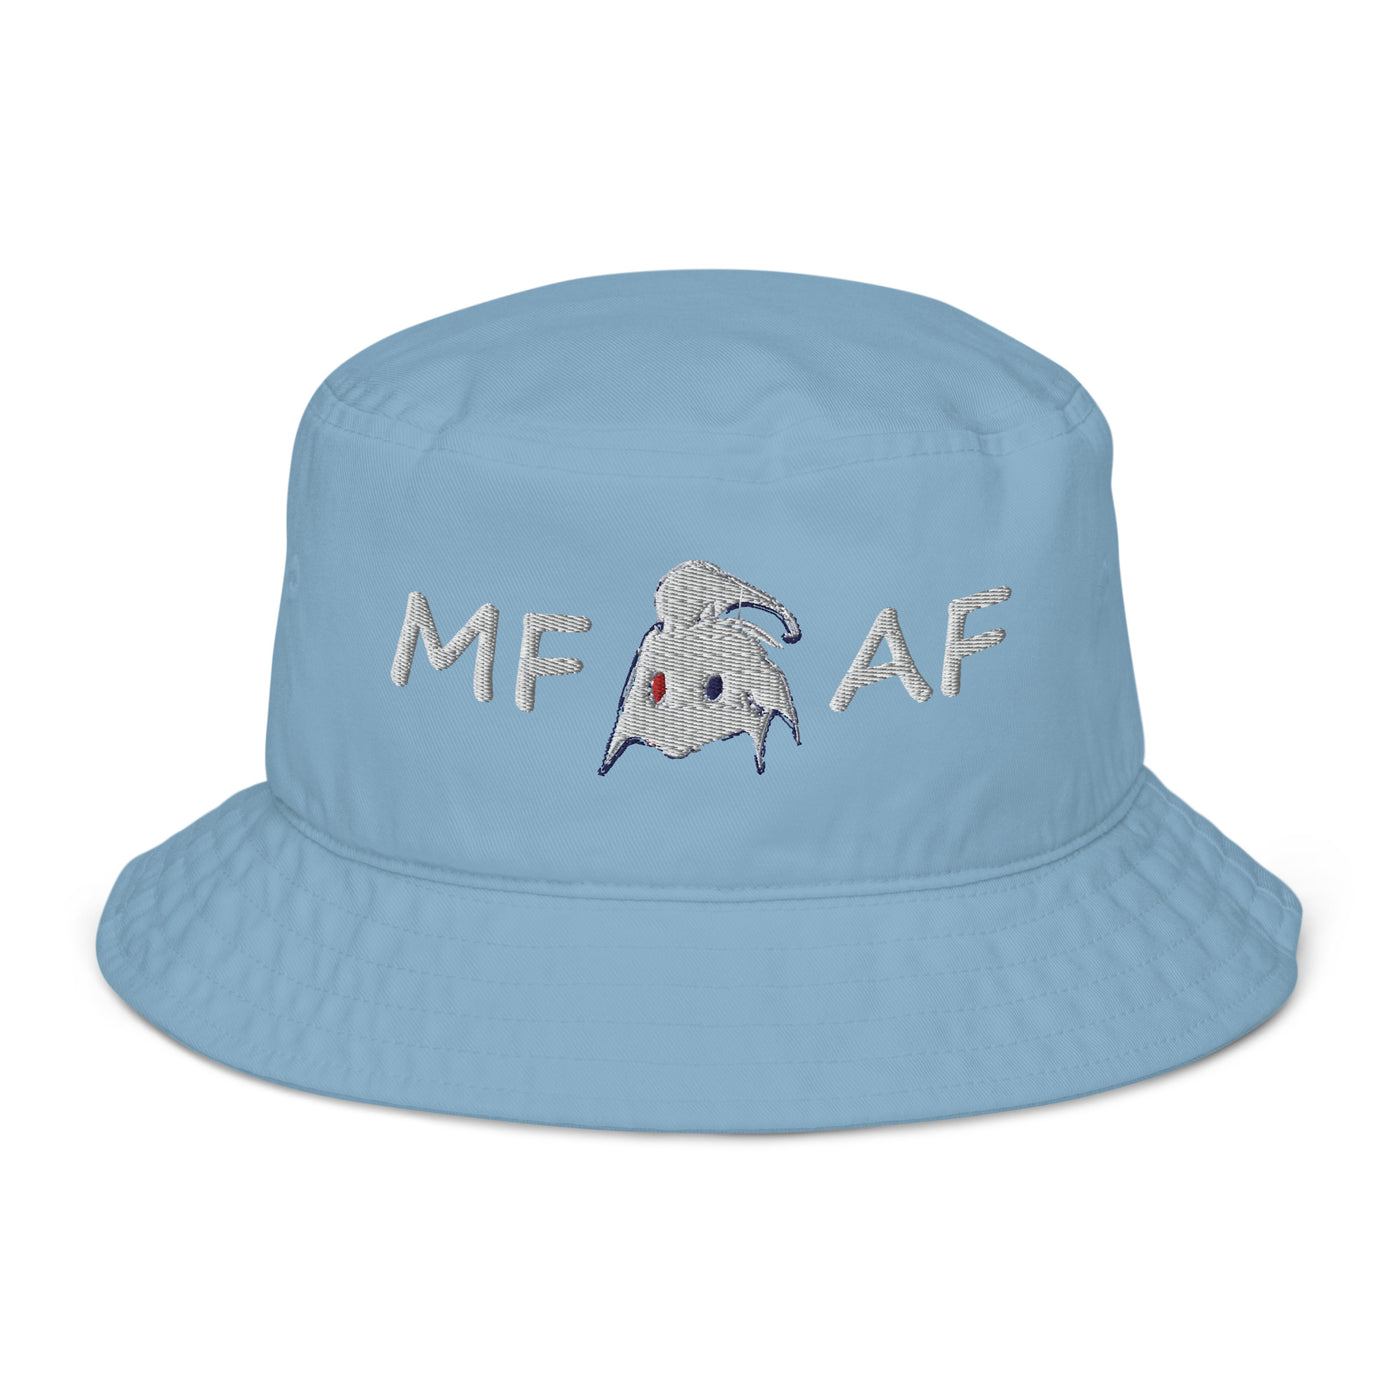 MFAF Bucket Hat #2